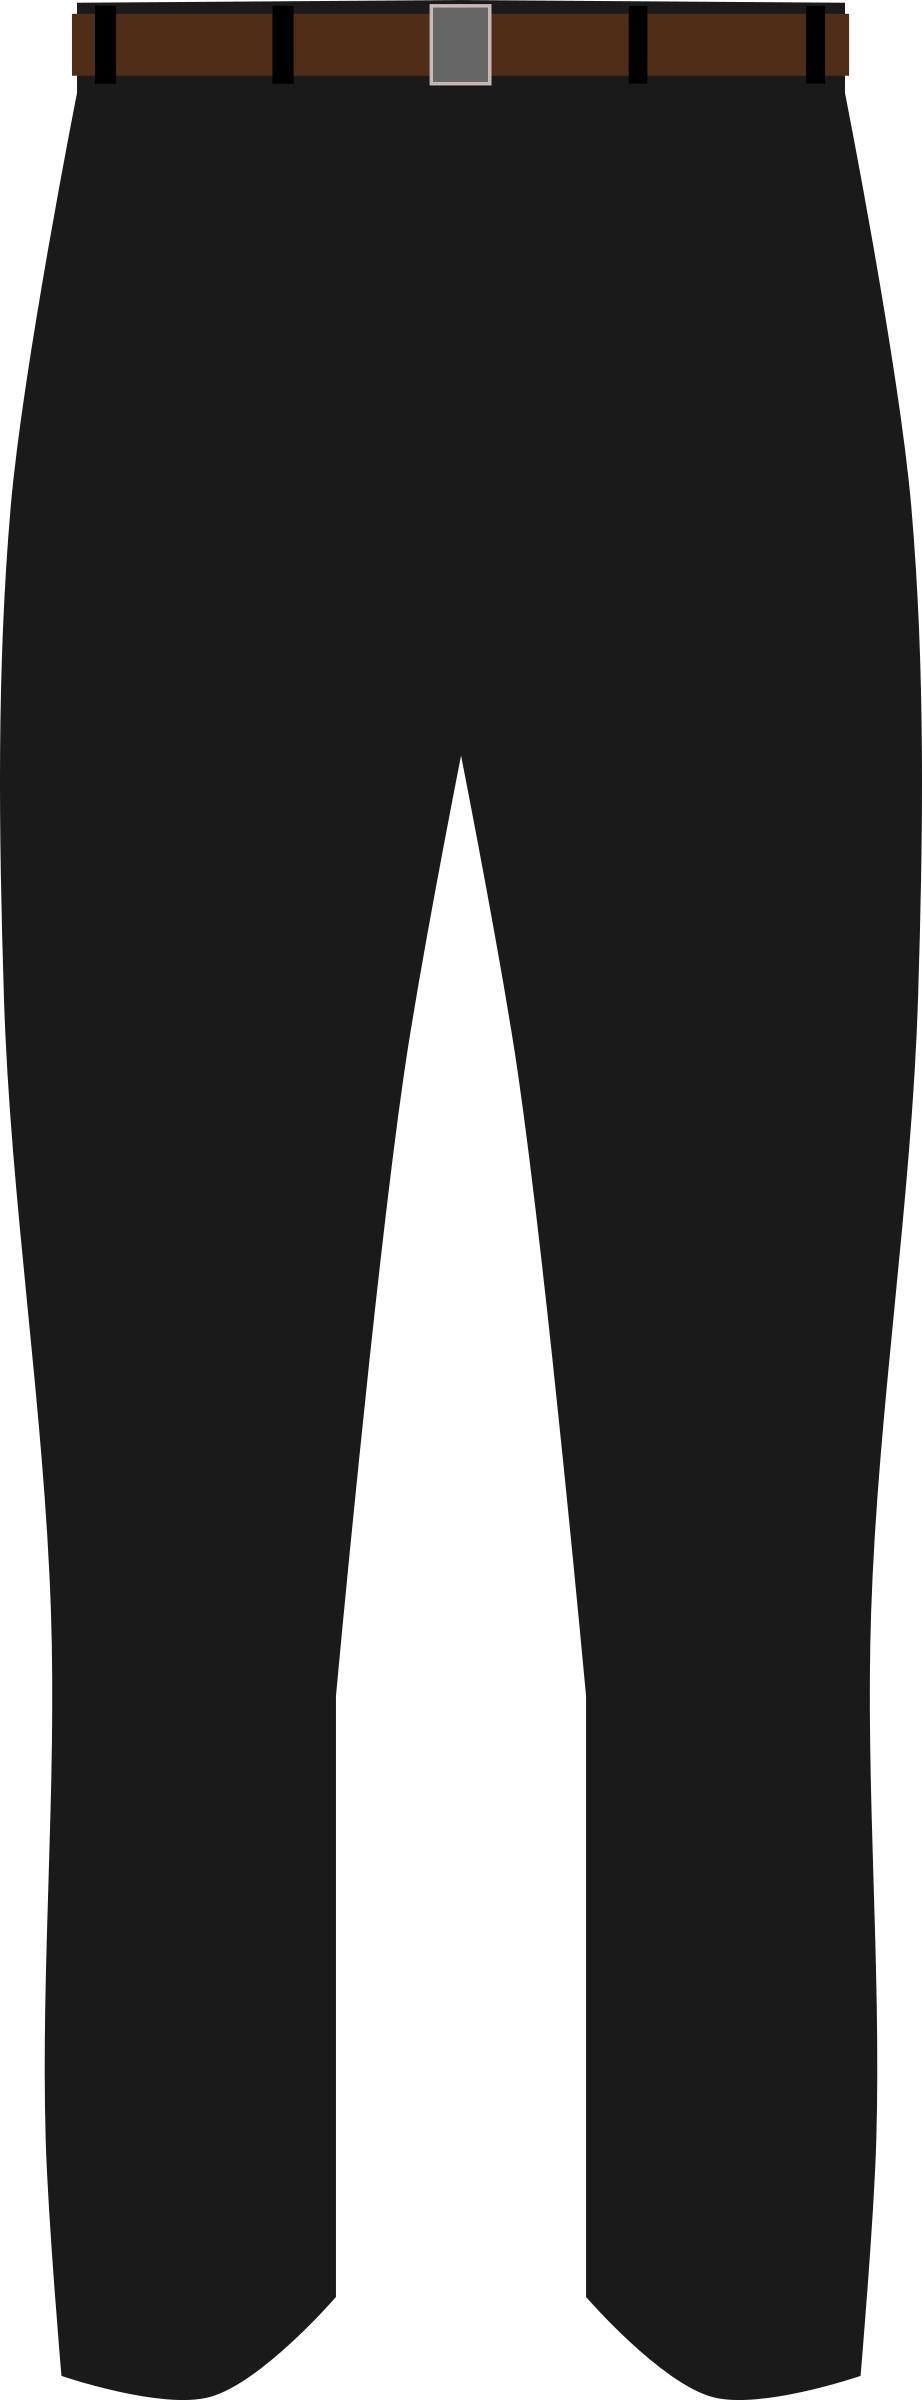 Black Pants png transparent